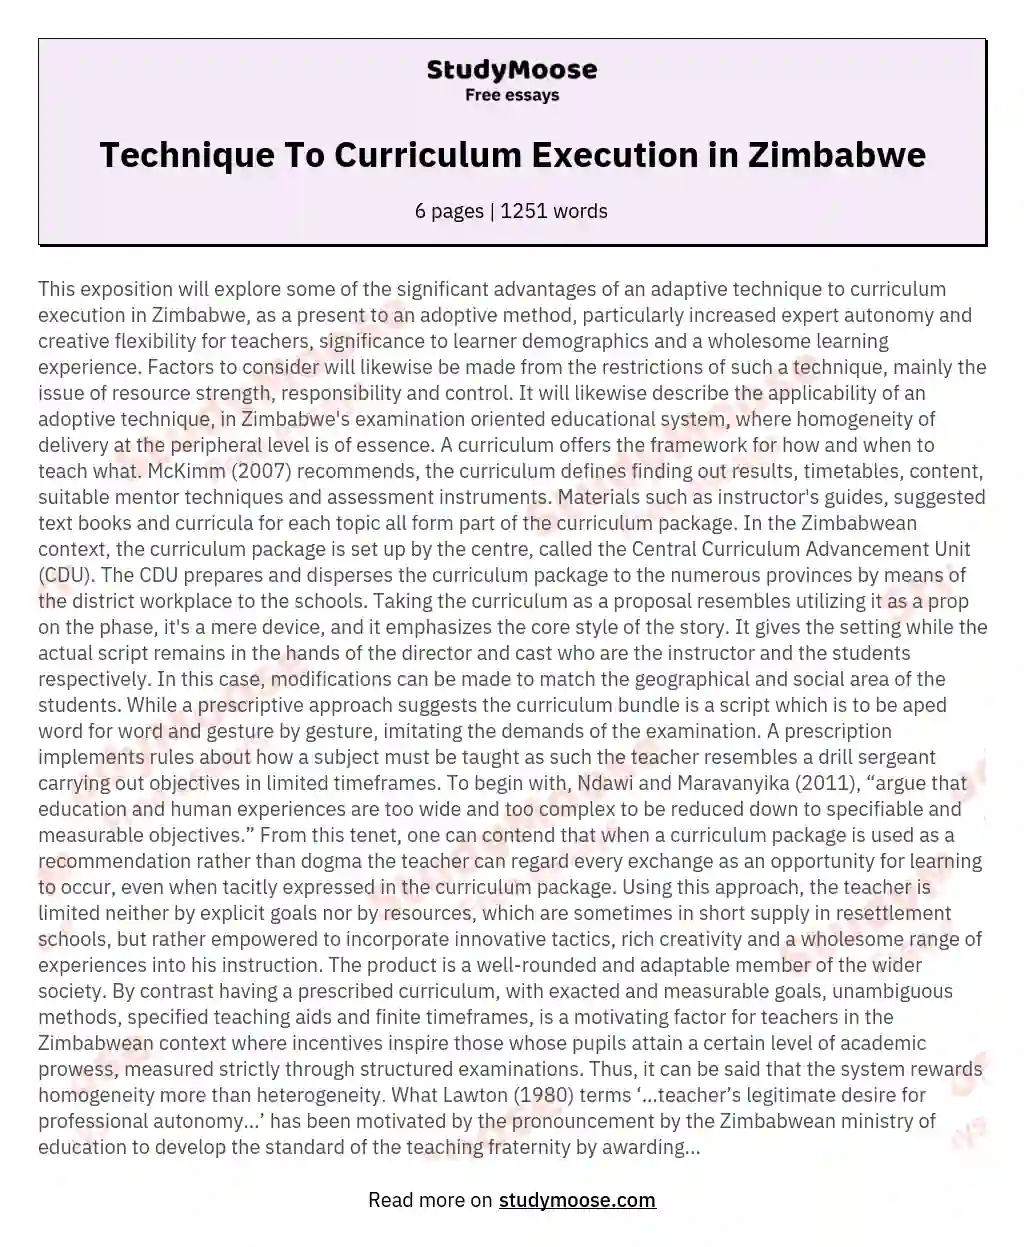 Technique To Curriculum Execution in Zimbabwe essay